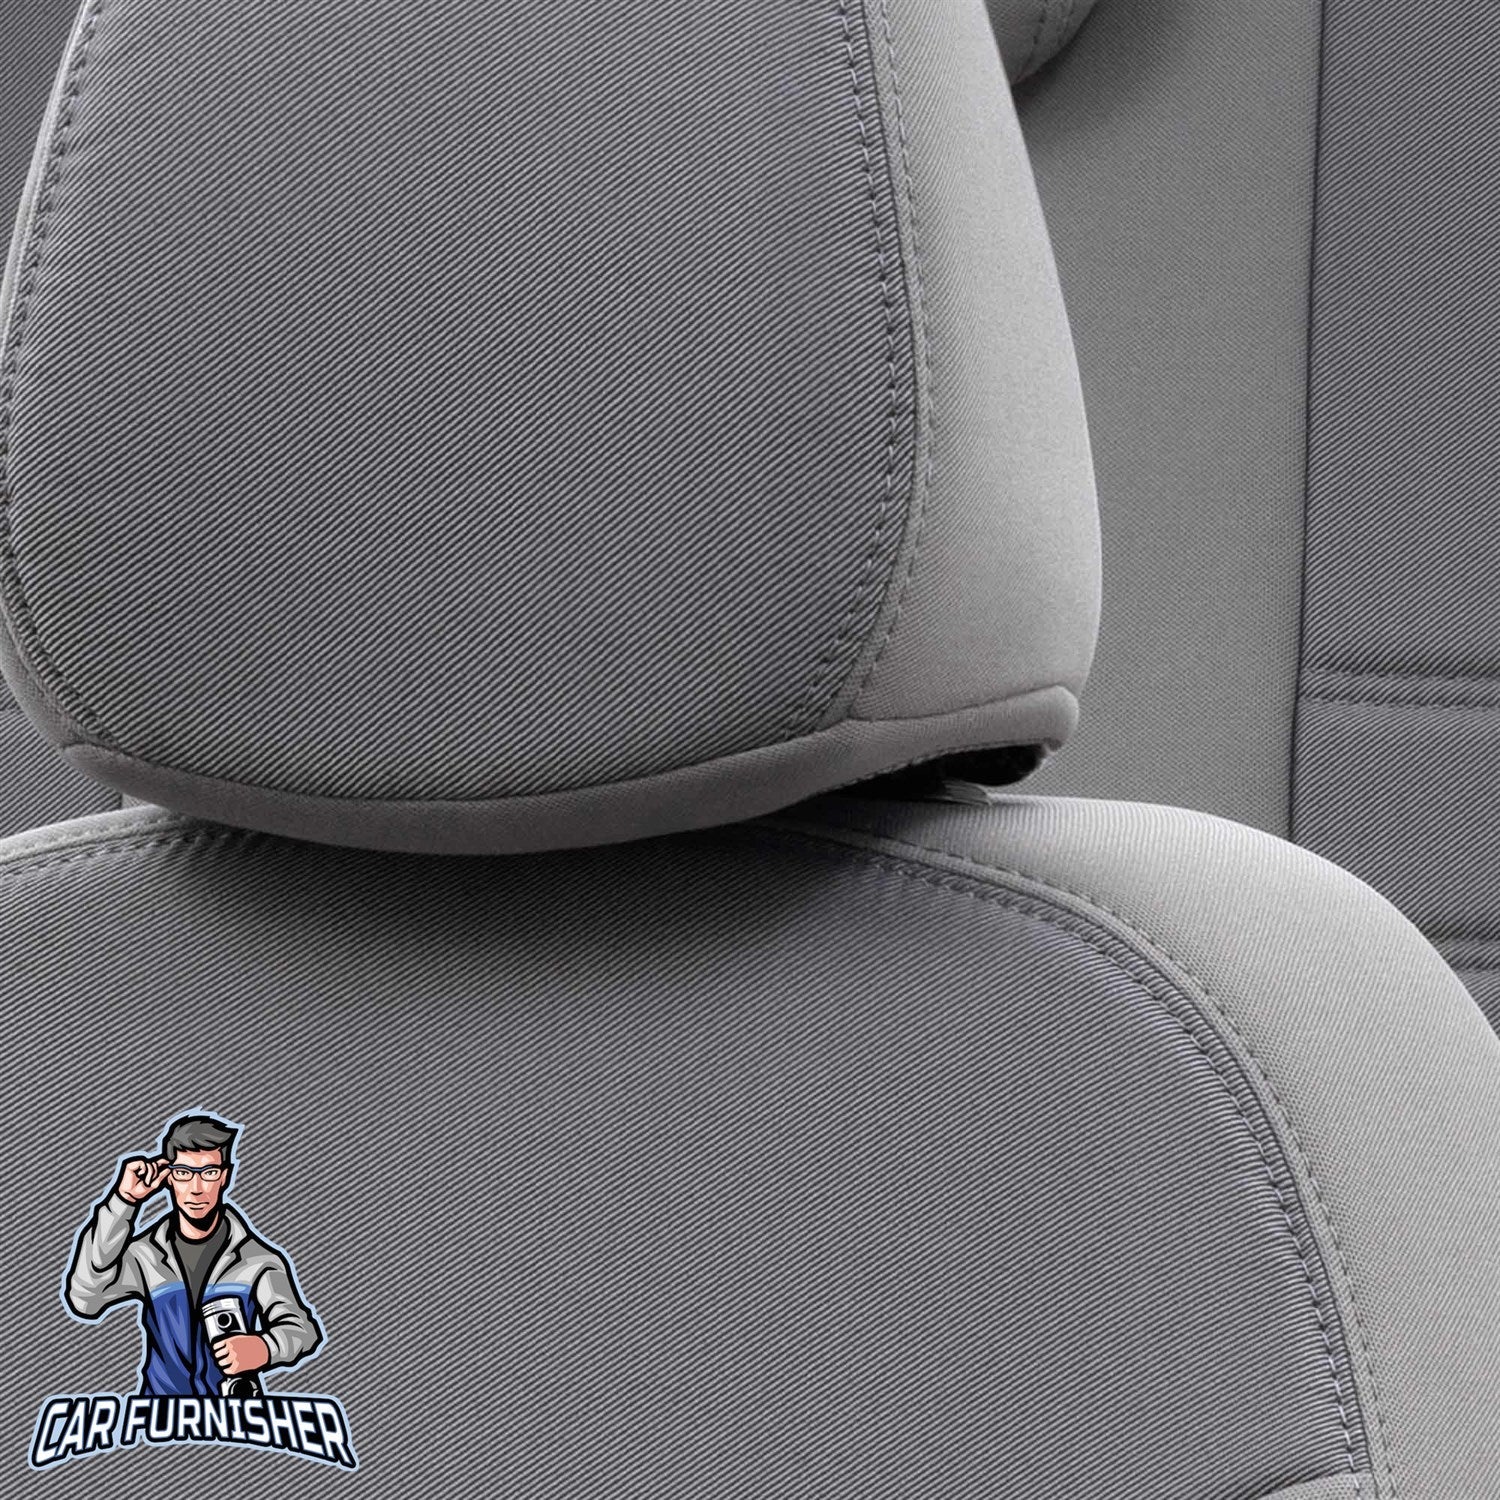 Toyota Corolla Seat Cover Original Jacquard Design Gray Jacquard Fabric